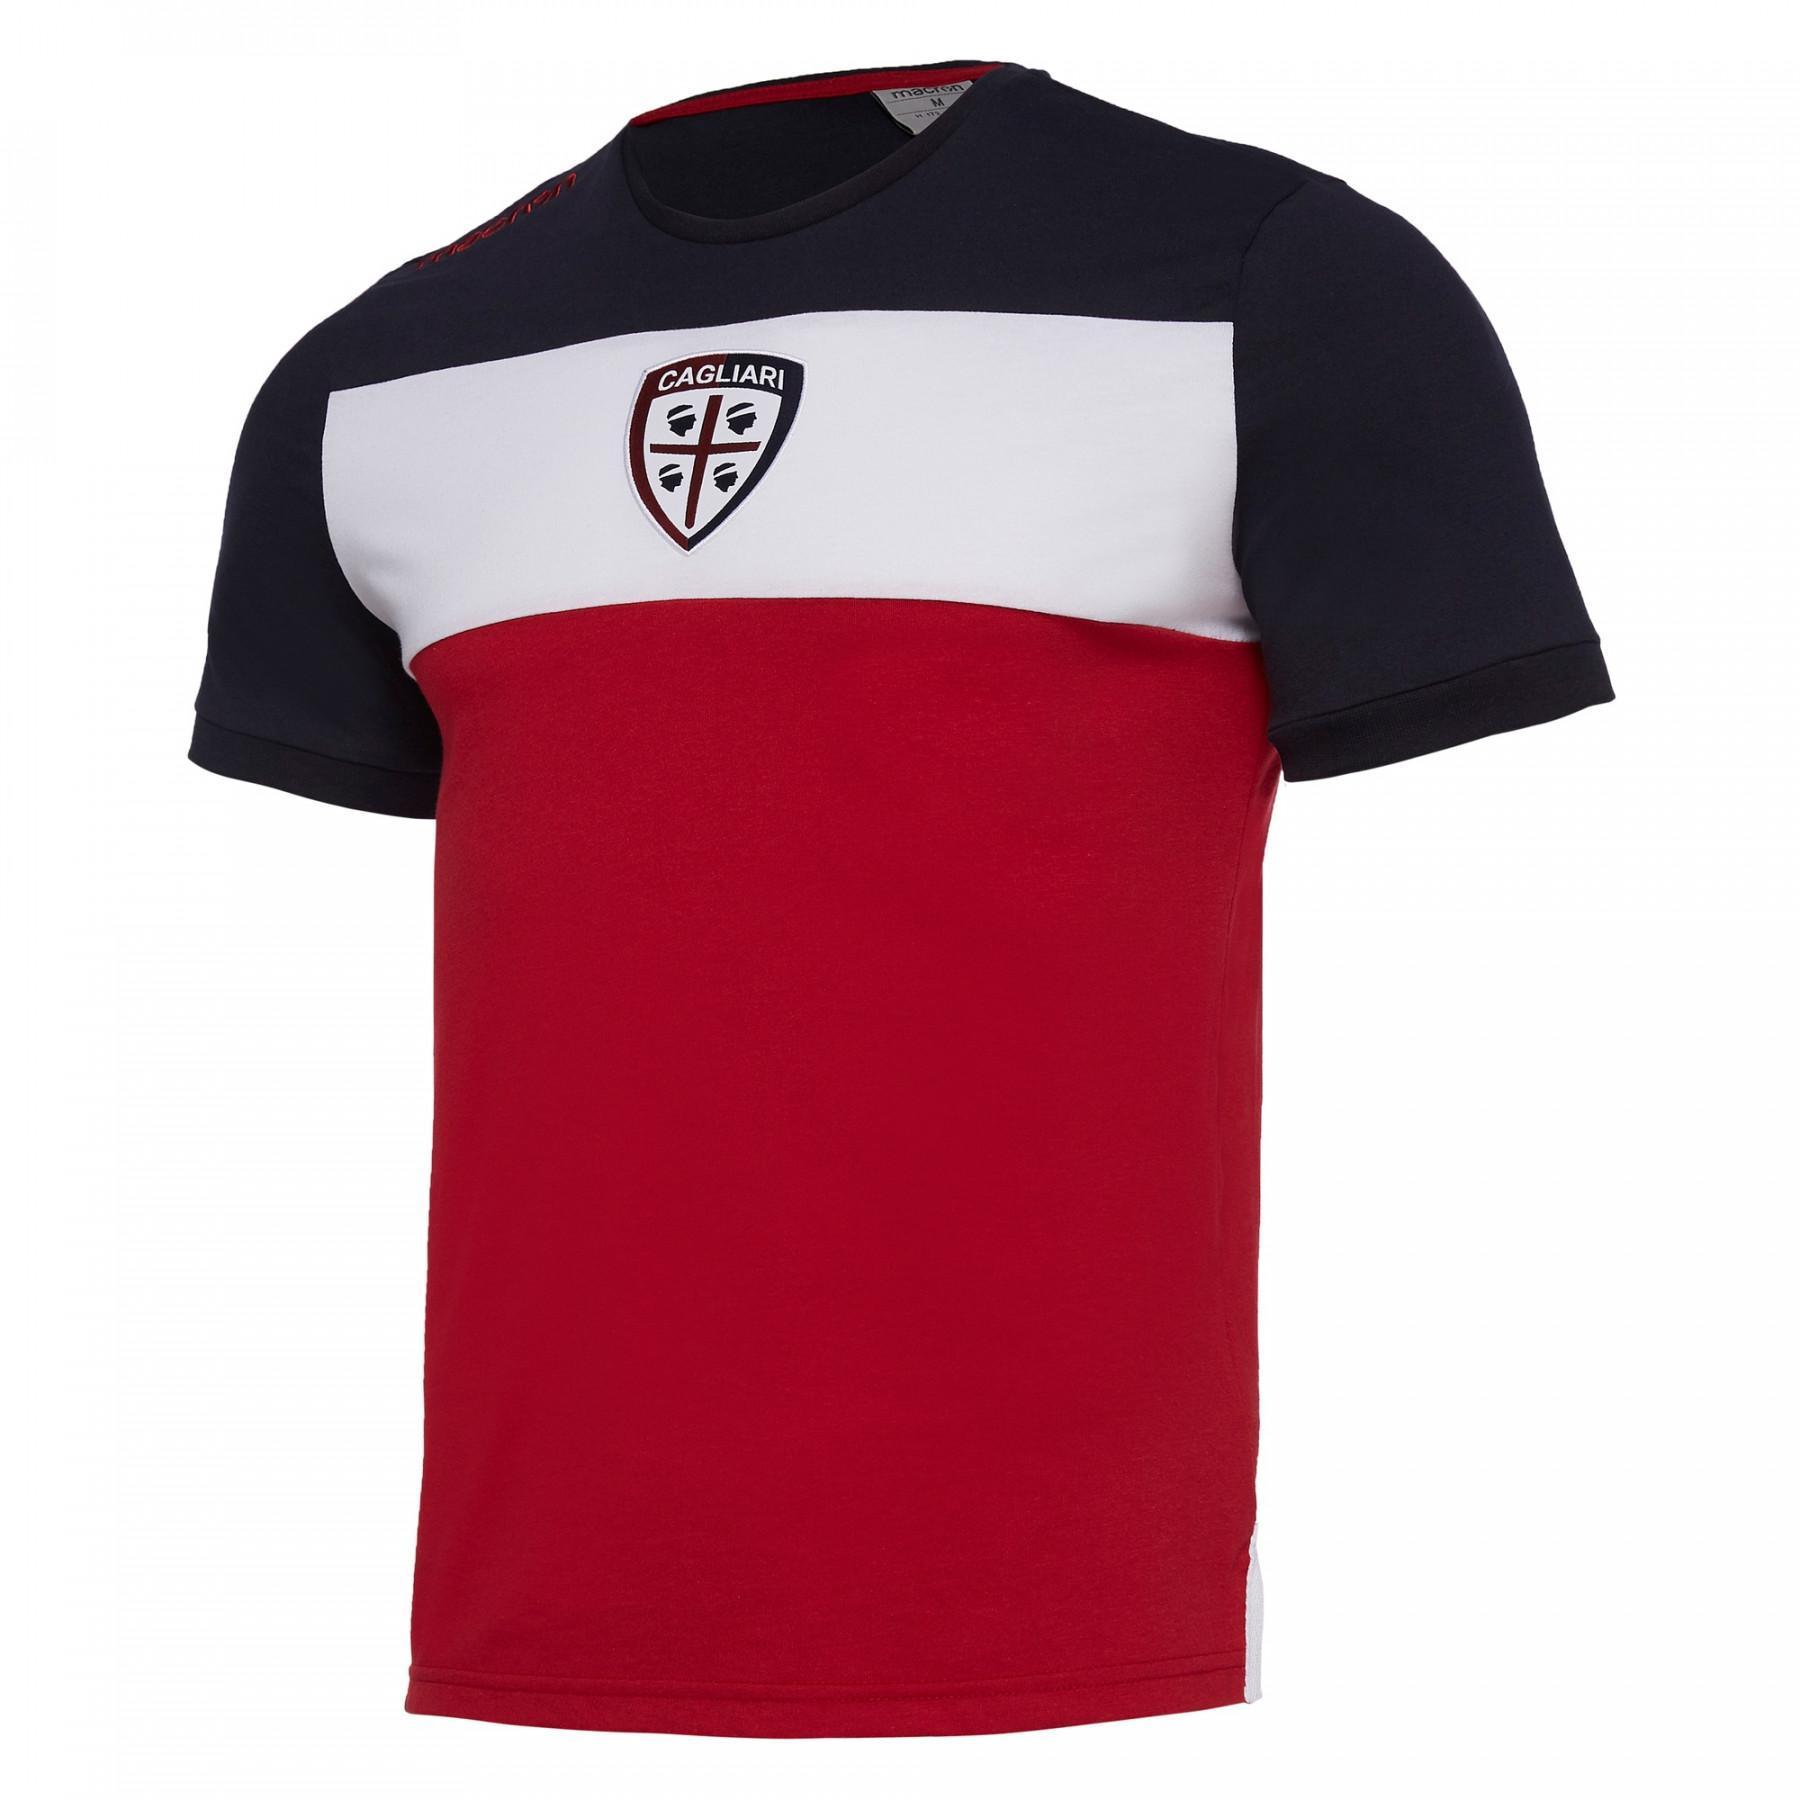 T-shirt Cagliari Calcio bh 3 logo